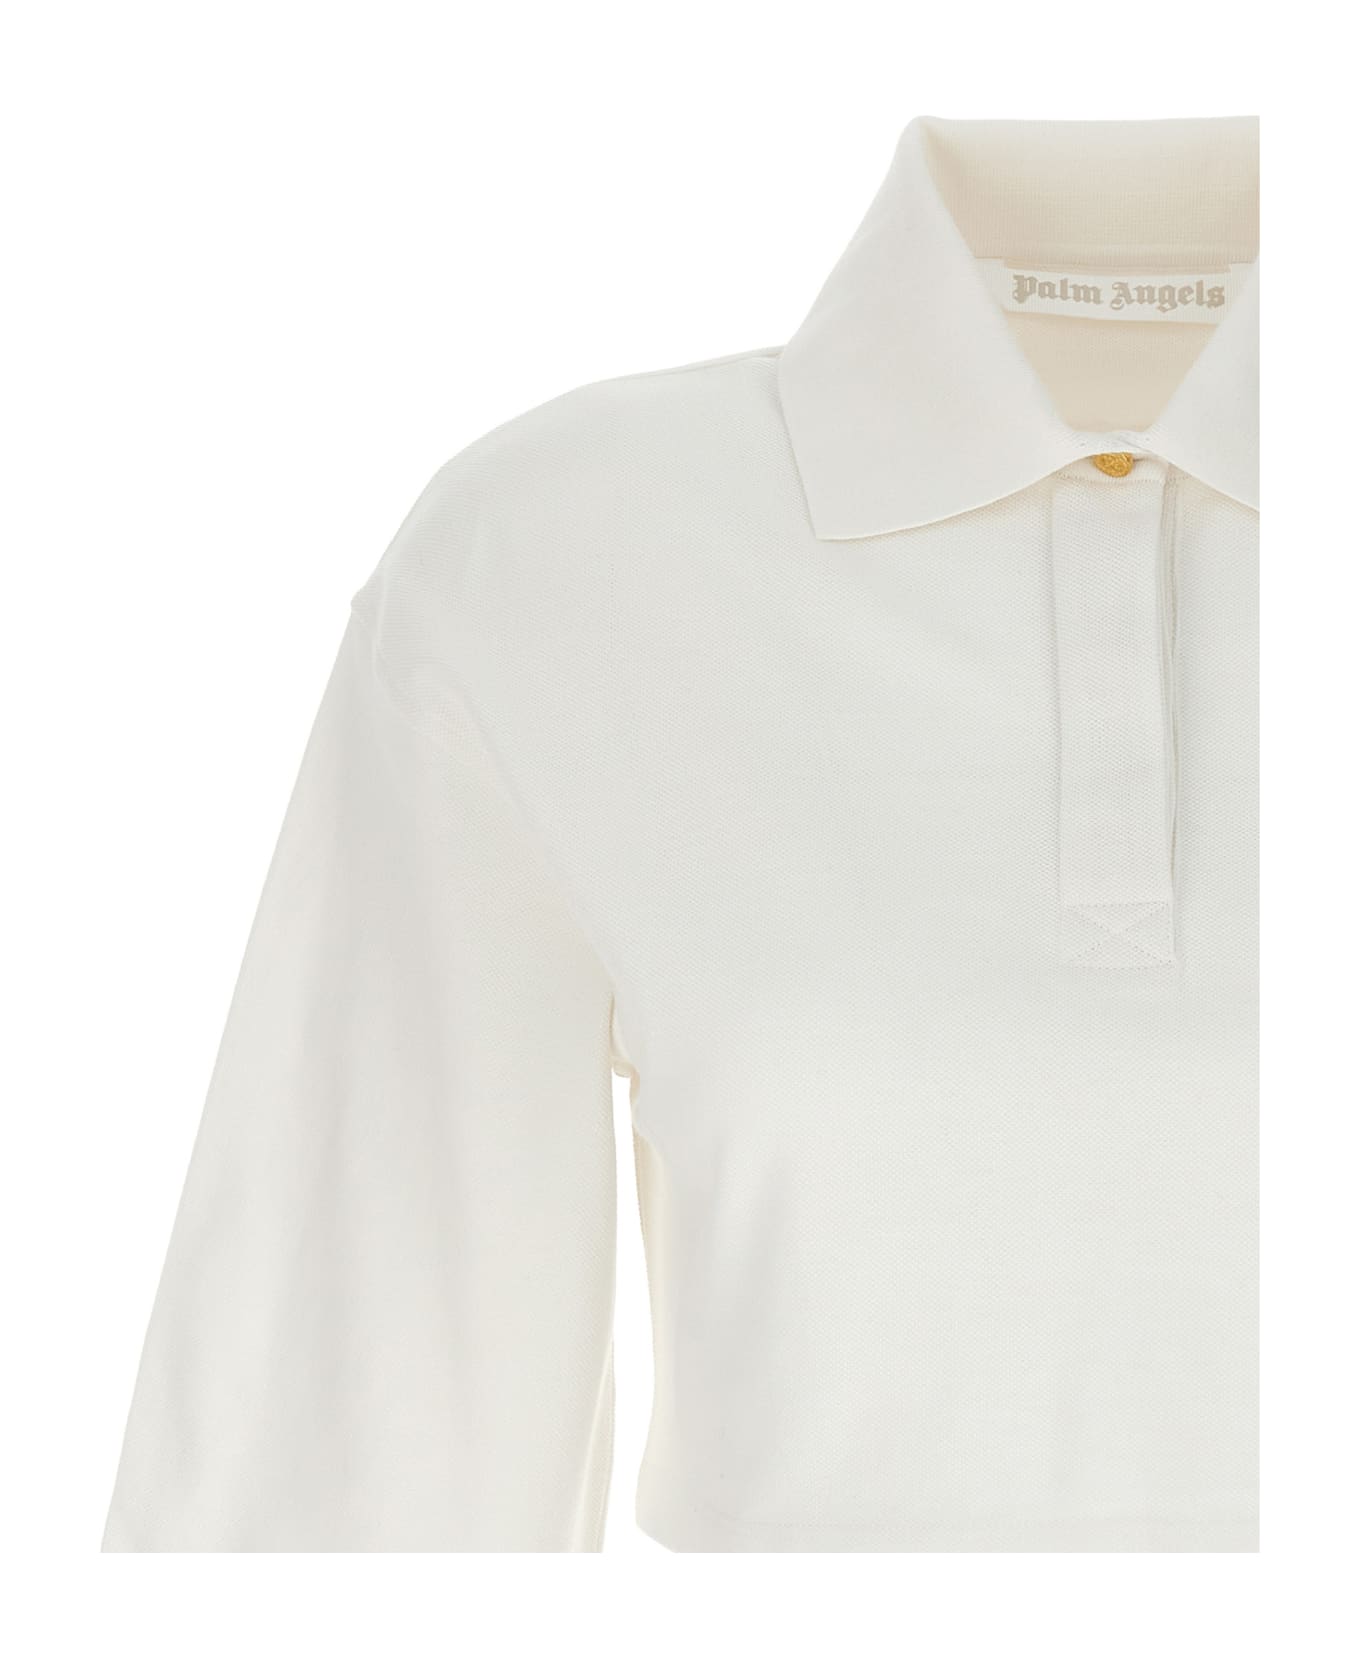 Palm Angels 'monogram' Crop Polo Shirt - White/Black